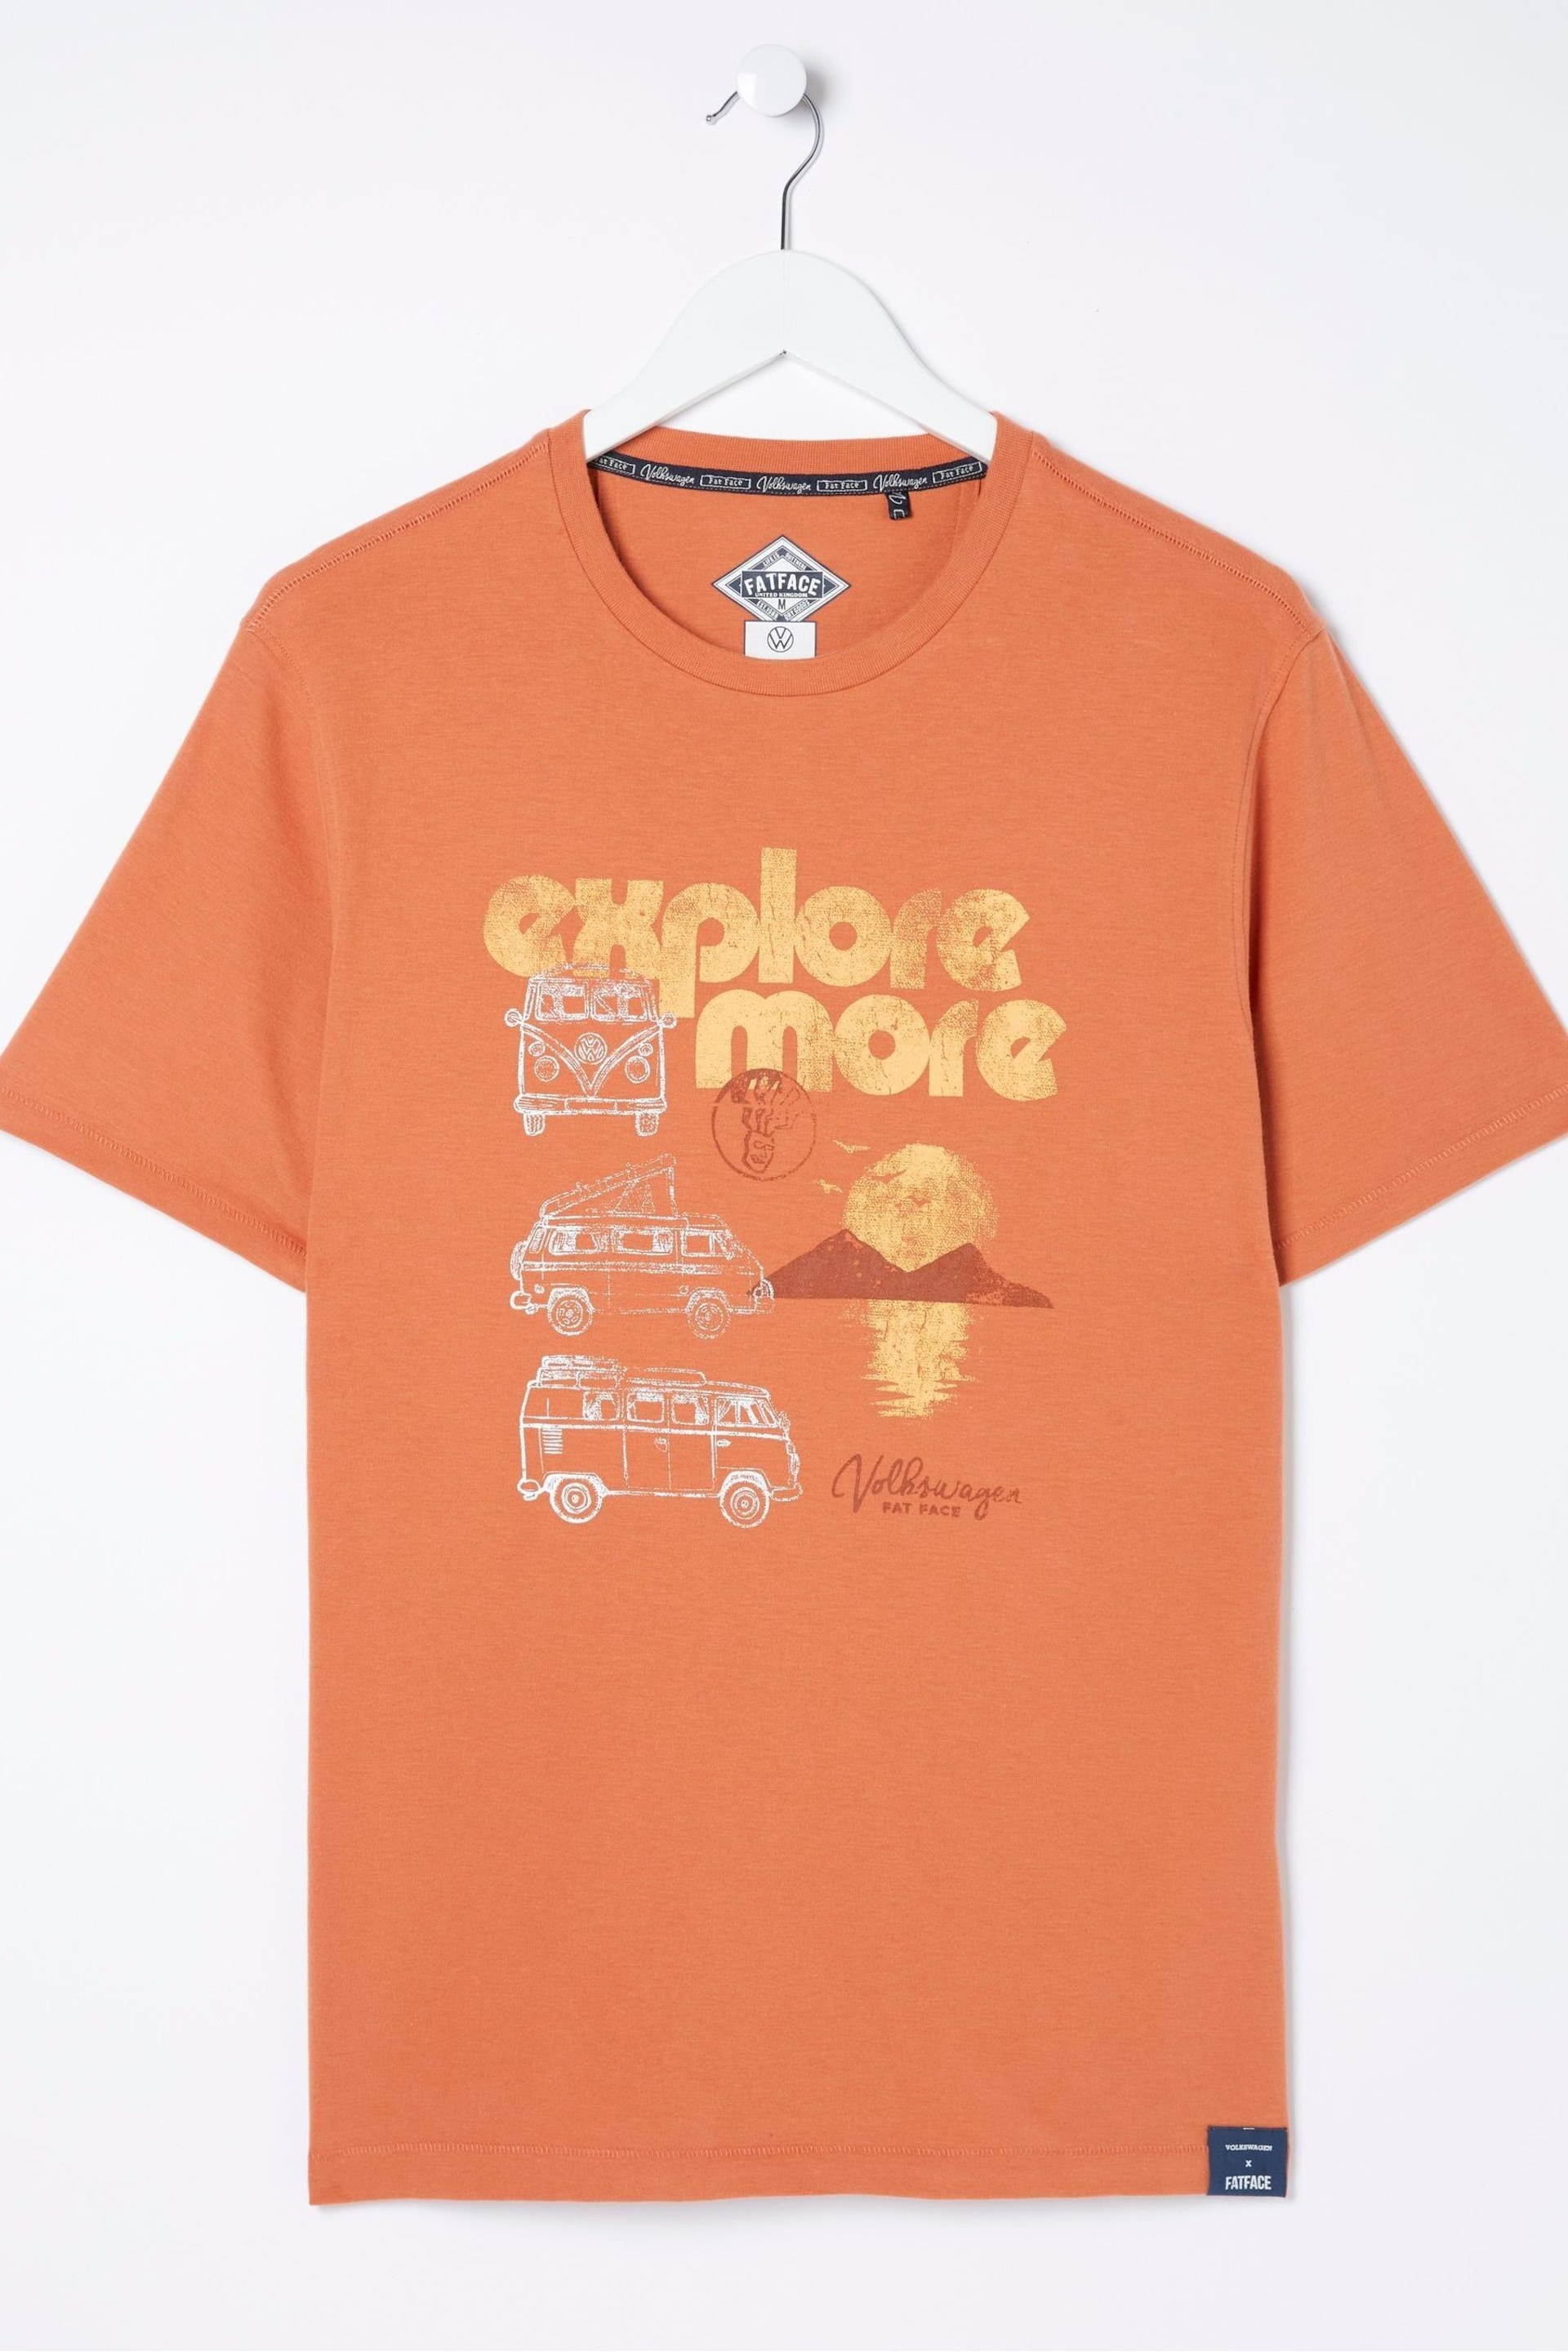 FatFace Orange VW Explore More T-Shirt - Image 5 of 5